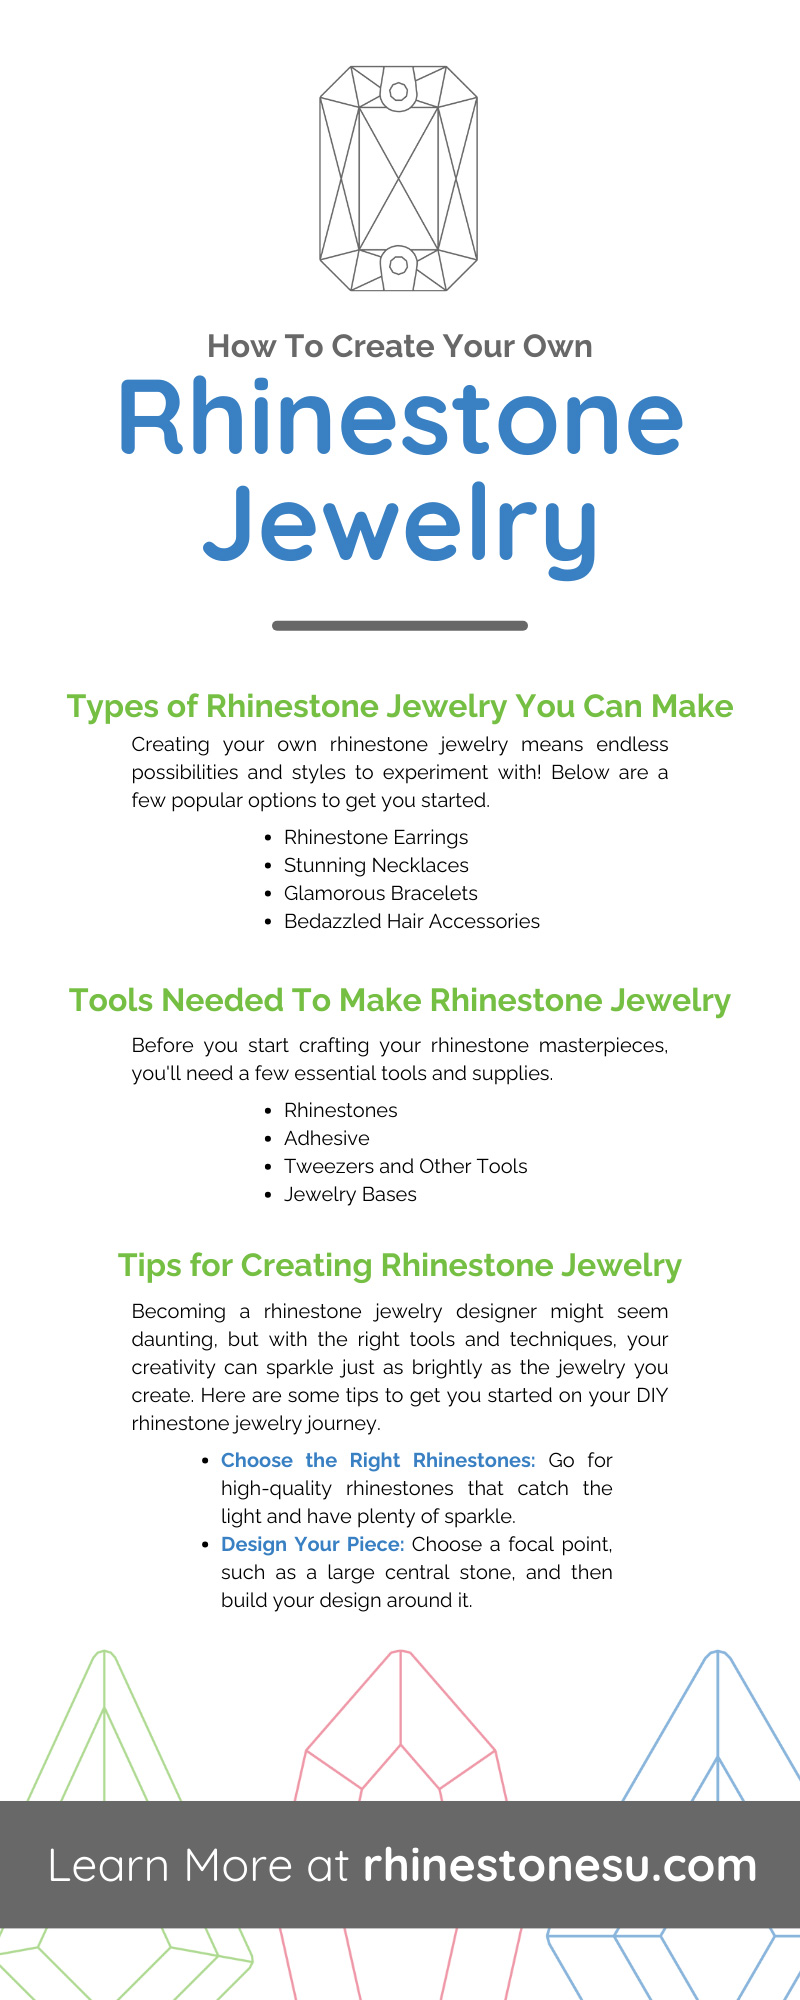 How To Create Your Own Rhinestone Jewelry